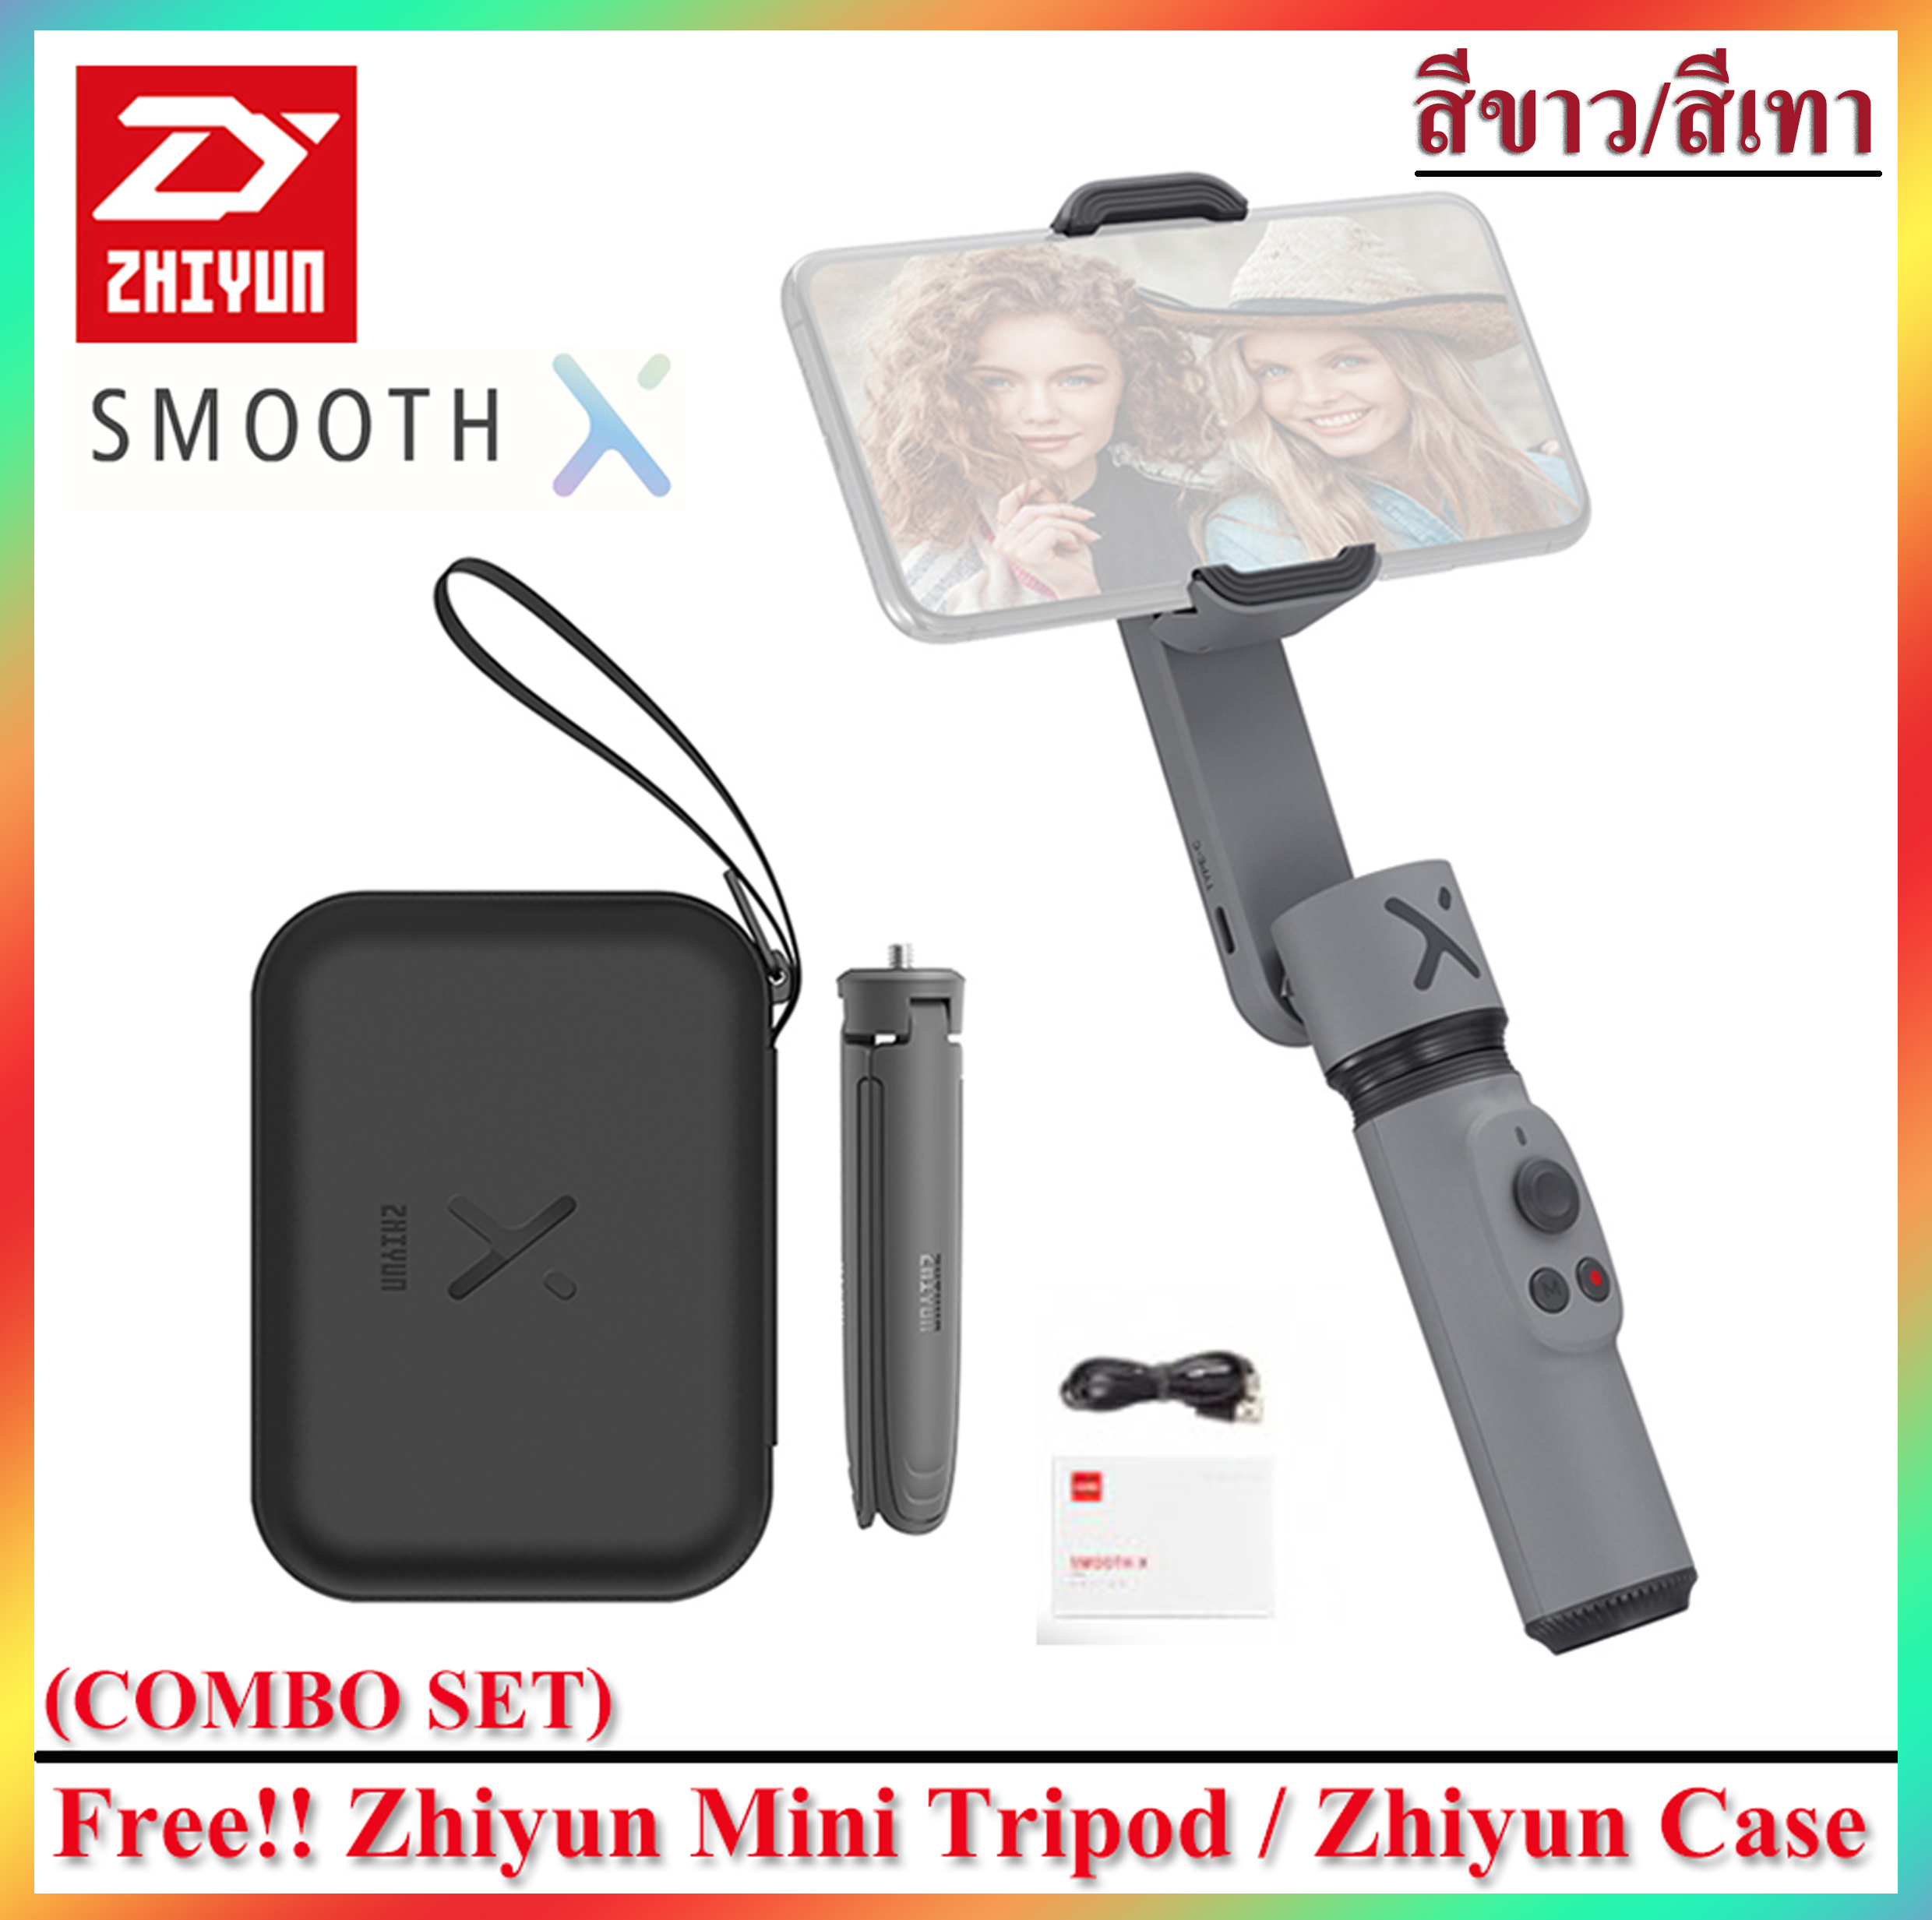 Zhiyun Smooth X (Combo Set) แถมฟรี Zhiyun Mini Tripod/Zhiyun Case (สินค้ามีสต๊อกพร้อมจัดส่ง)​